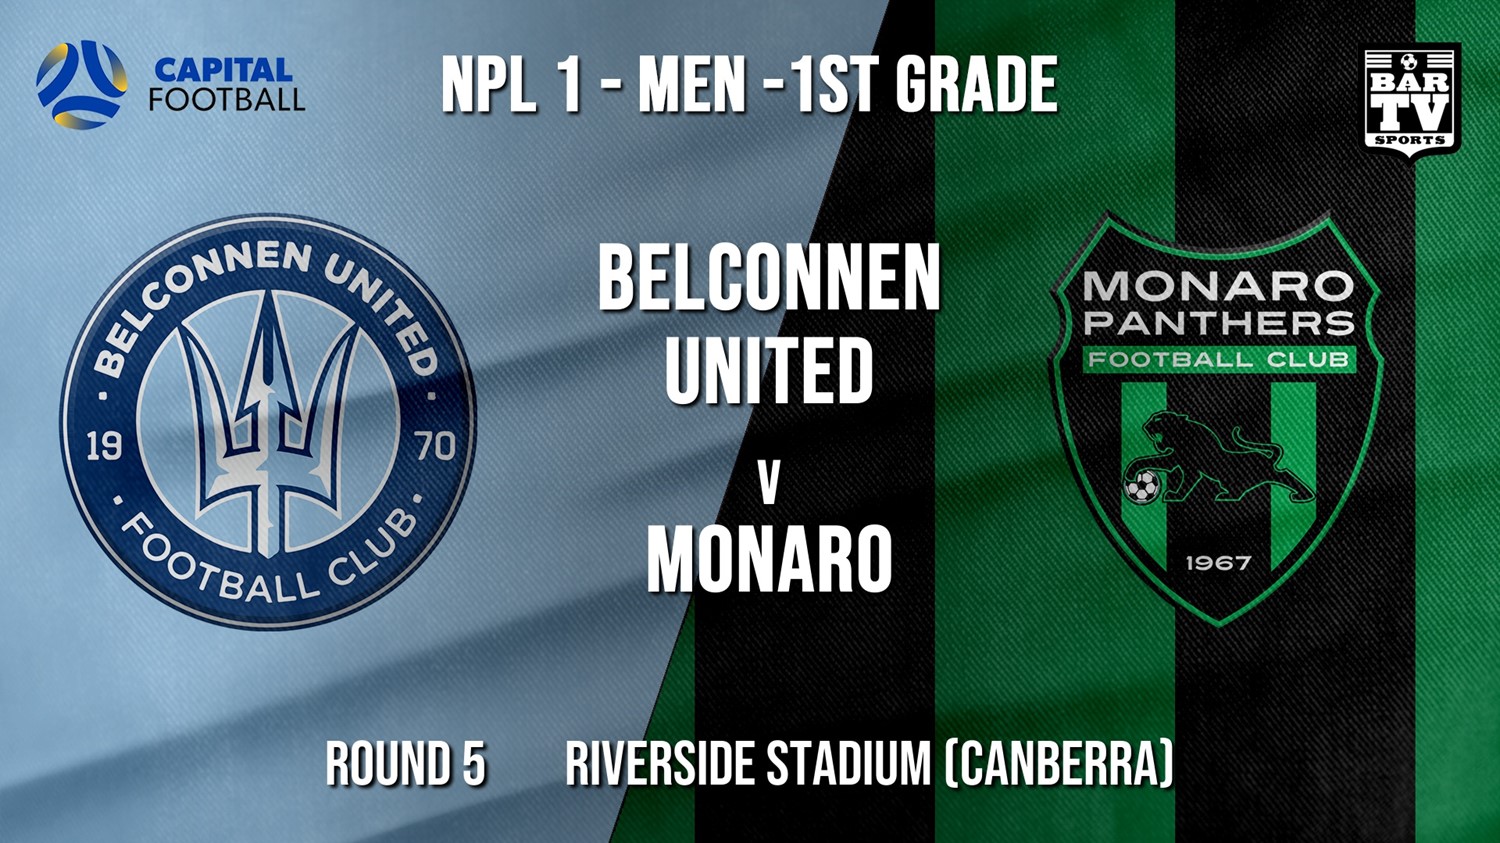 NPL - CAPITAL Round 5 - Belconnen United v Monaro Panthers FC Minigame Slate Image